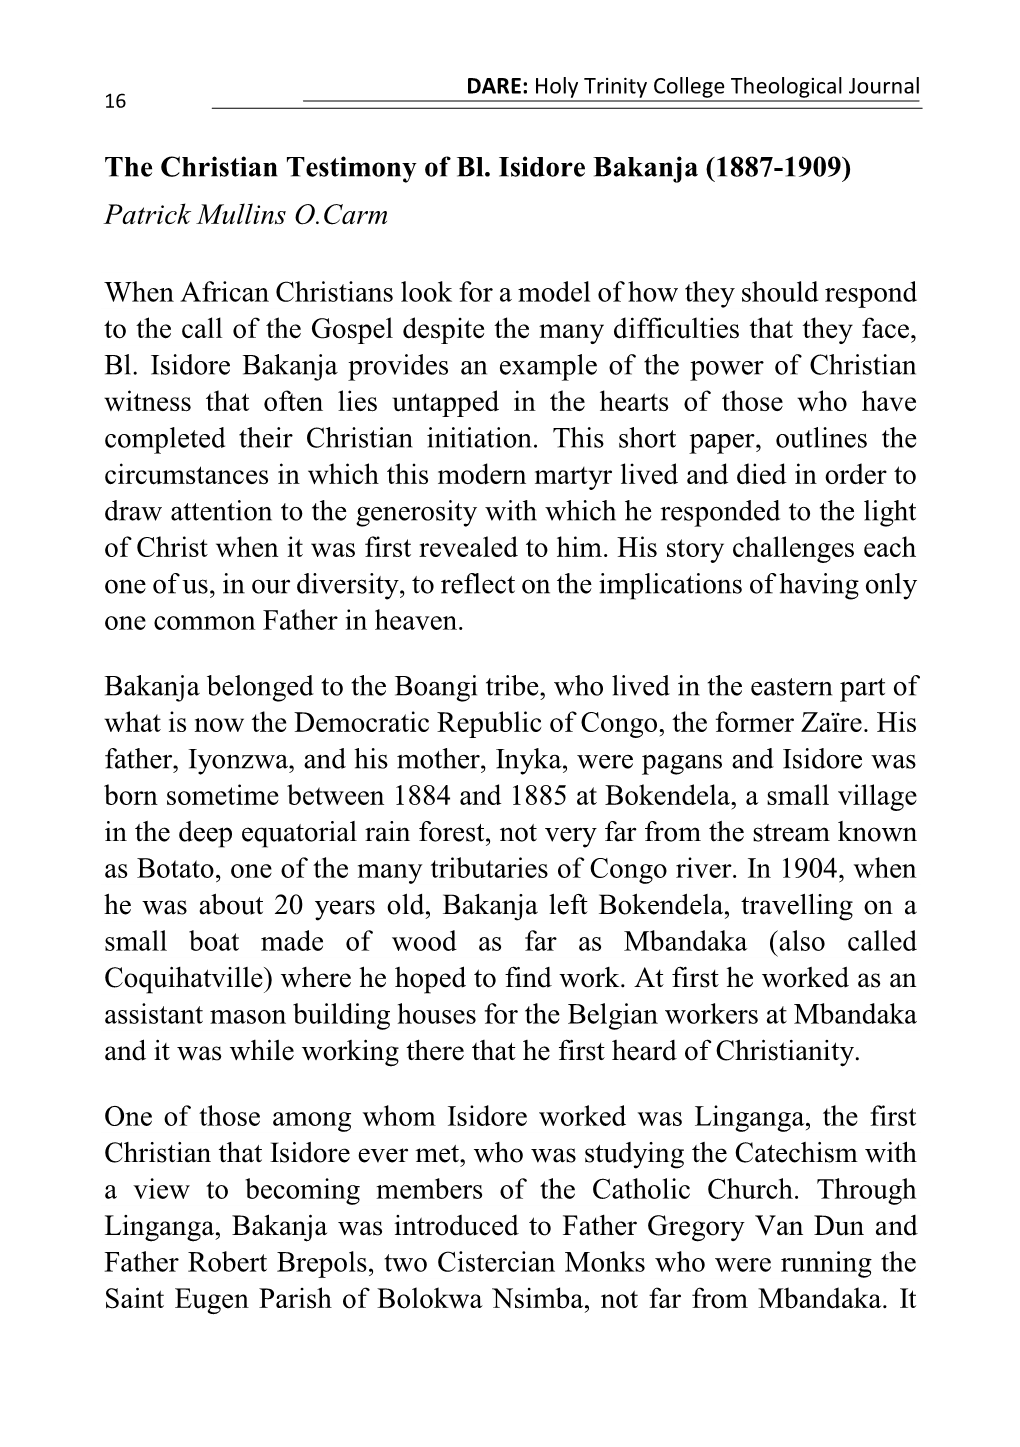 The Christian Testimony of Bl. Isidore Bakanja (1887-1909) Patrick Mullins O.Carm